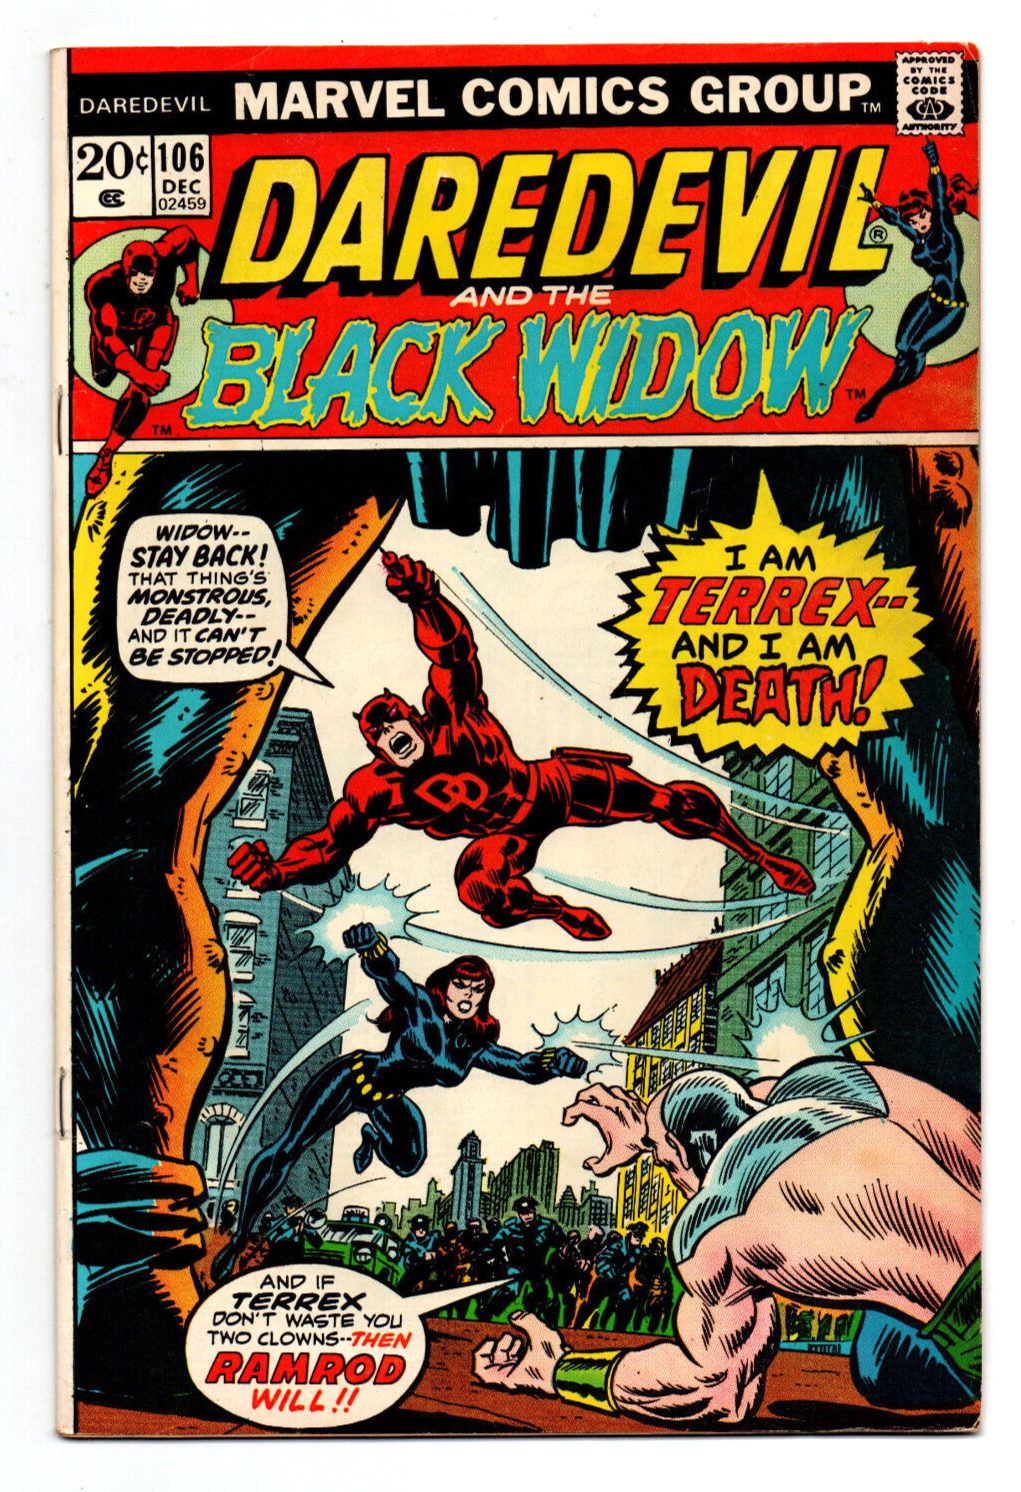 Daredevil #106 - Black Widow - Moondragon - 1973 - FN